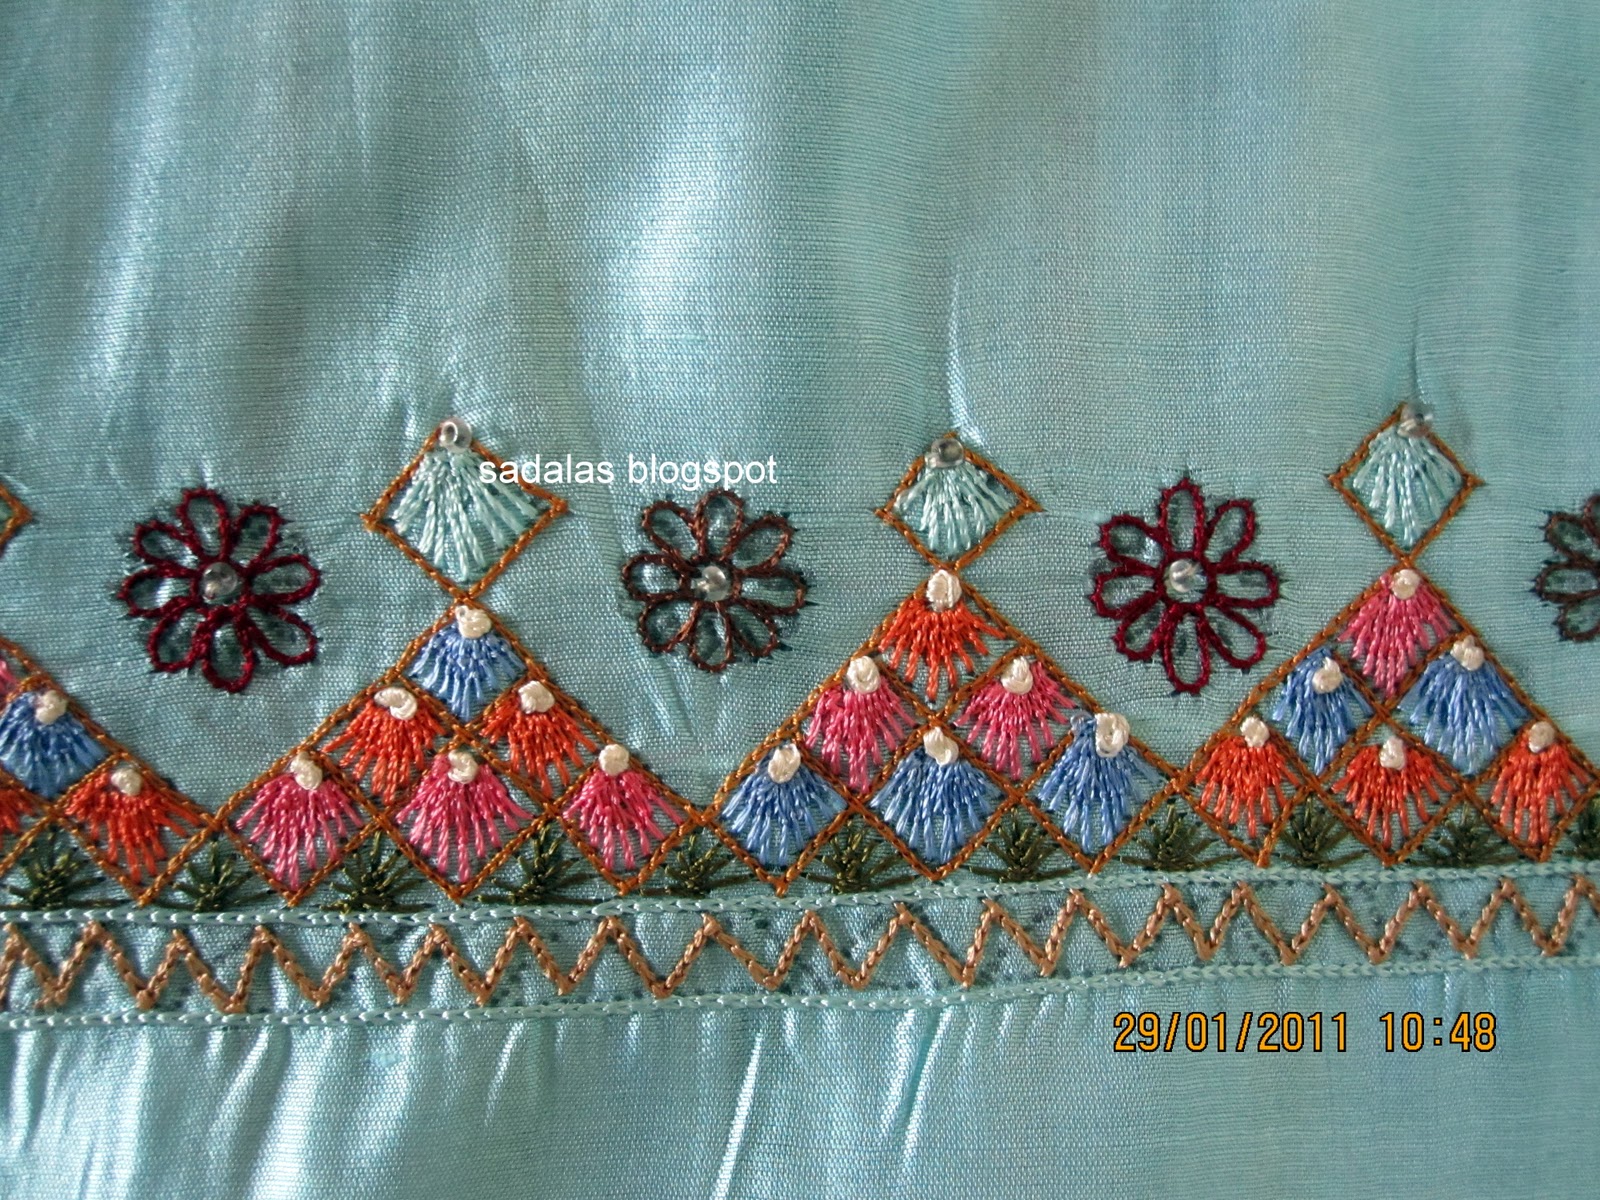 Shisha (embroidery) - Wikipedia, the free encyclopedia